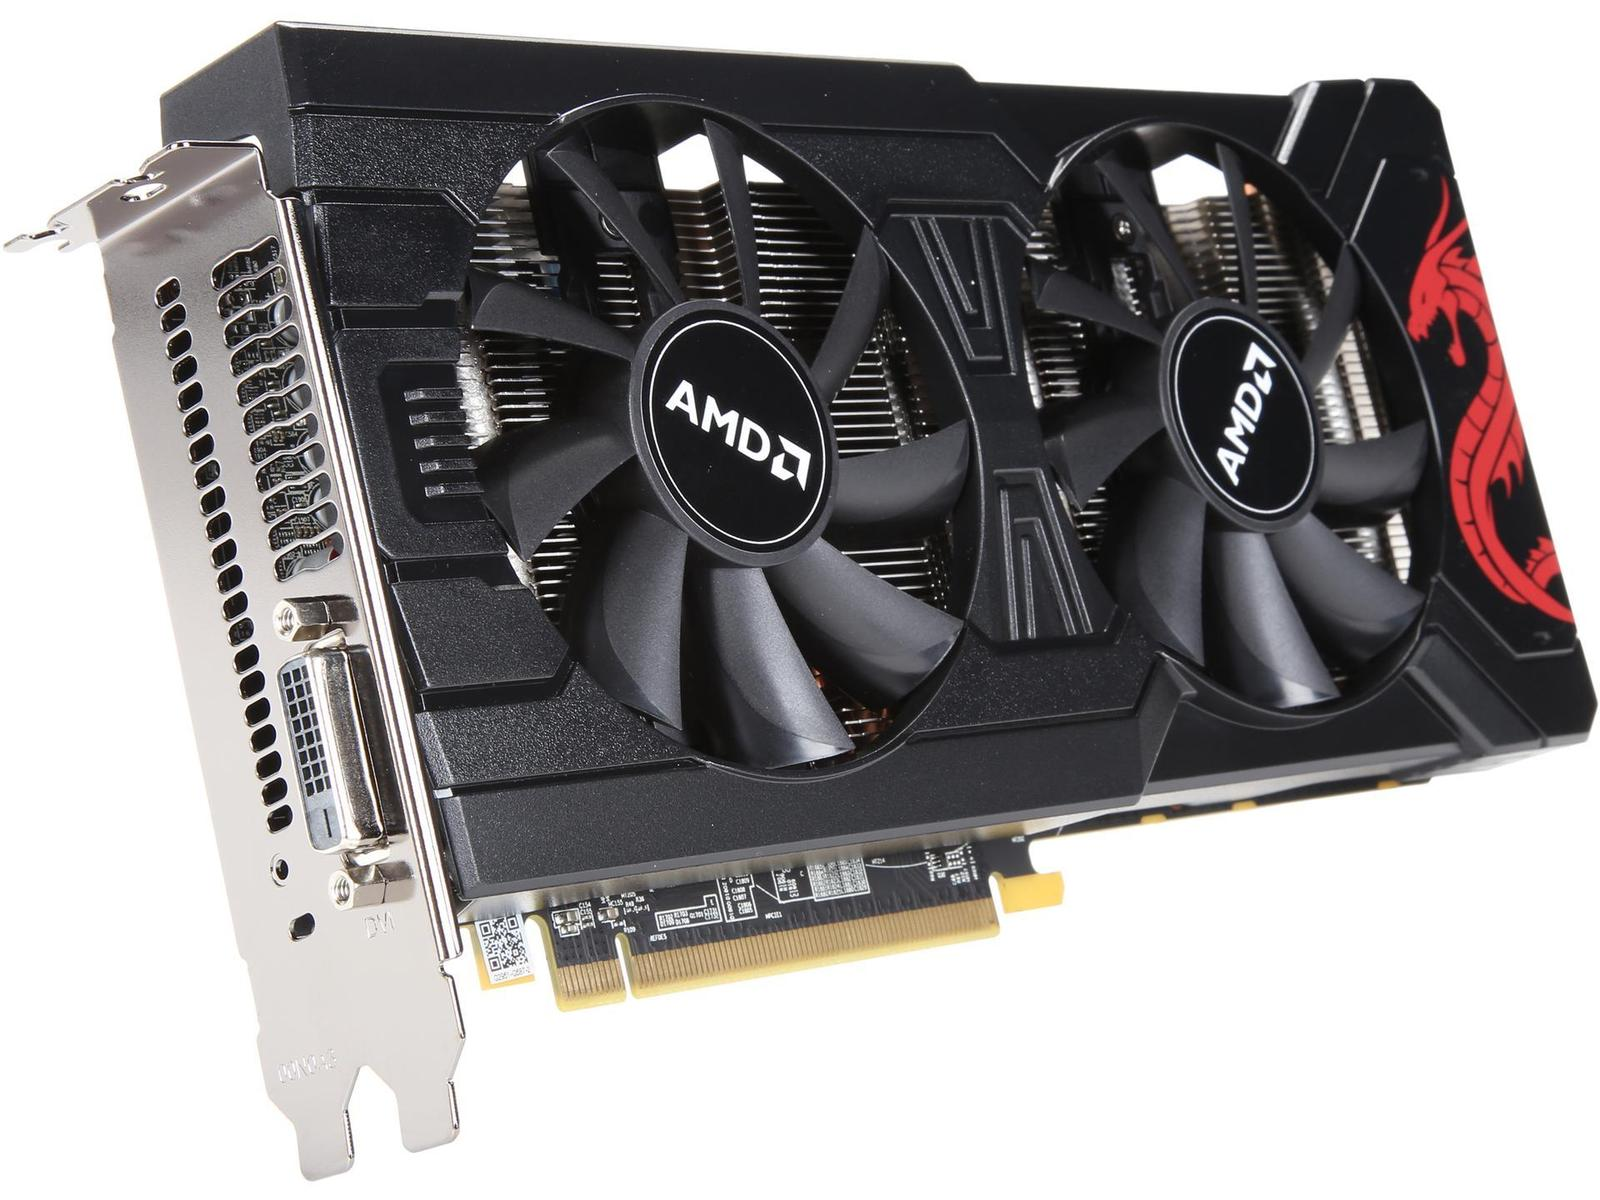 Ati radeon rx. AMD Radeon RX 570 8gb. Видеокарта RX 570 8gb. AMD RX 570 4gb. POWERCOLOR RX 570 8gb.